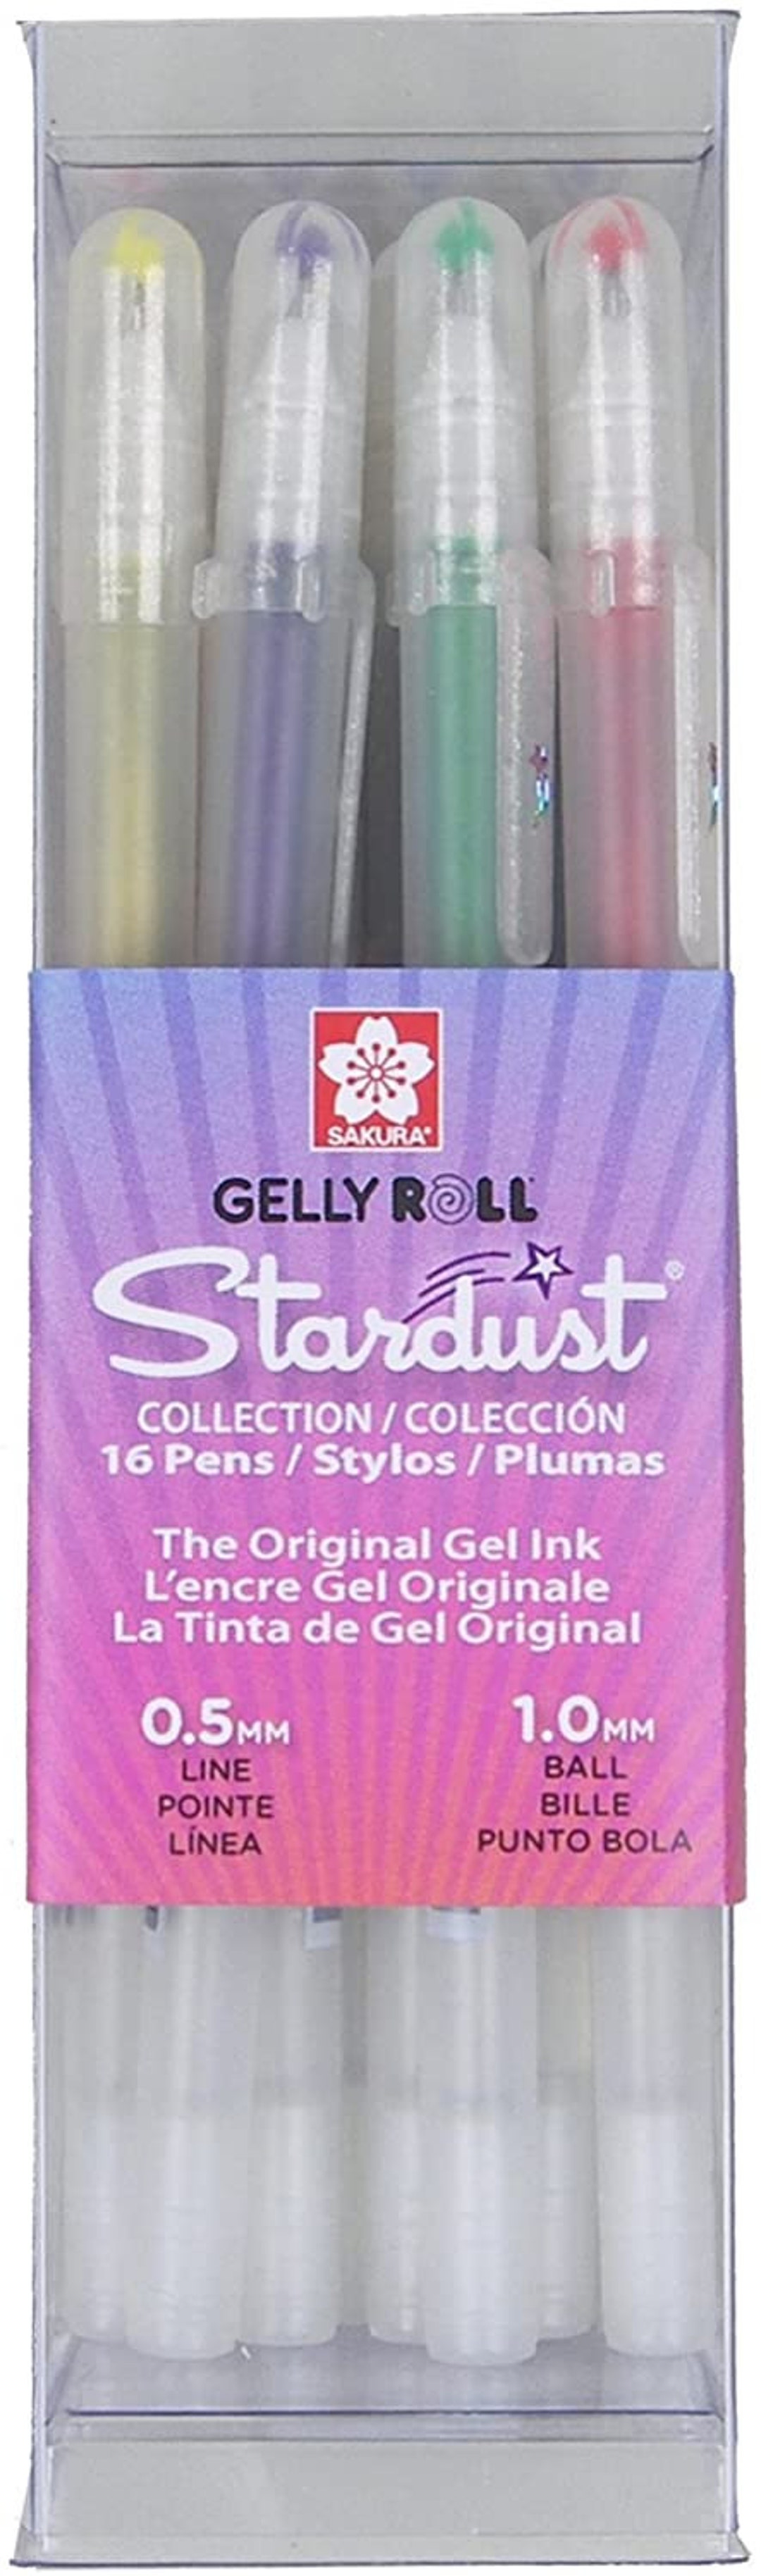 Sakura Gelly Roll Stardust Assorted Colors Glitter Pen Set 